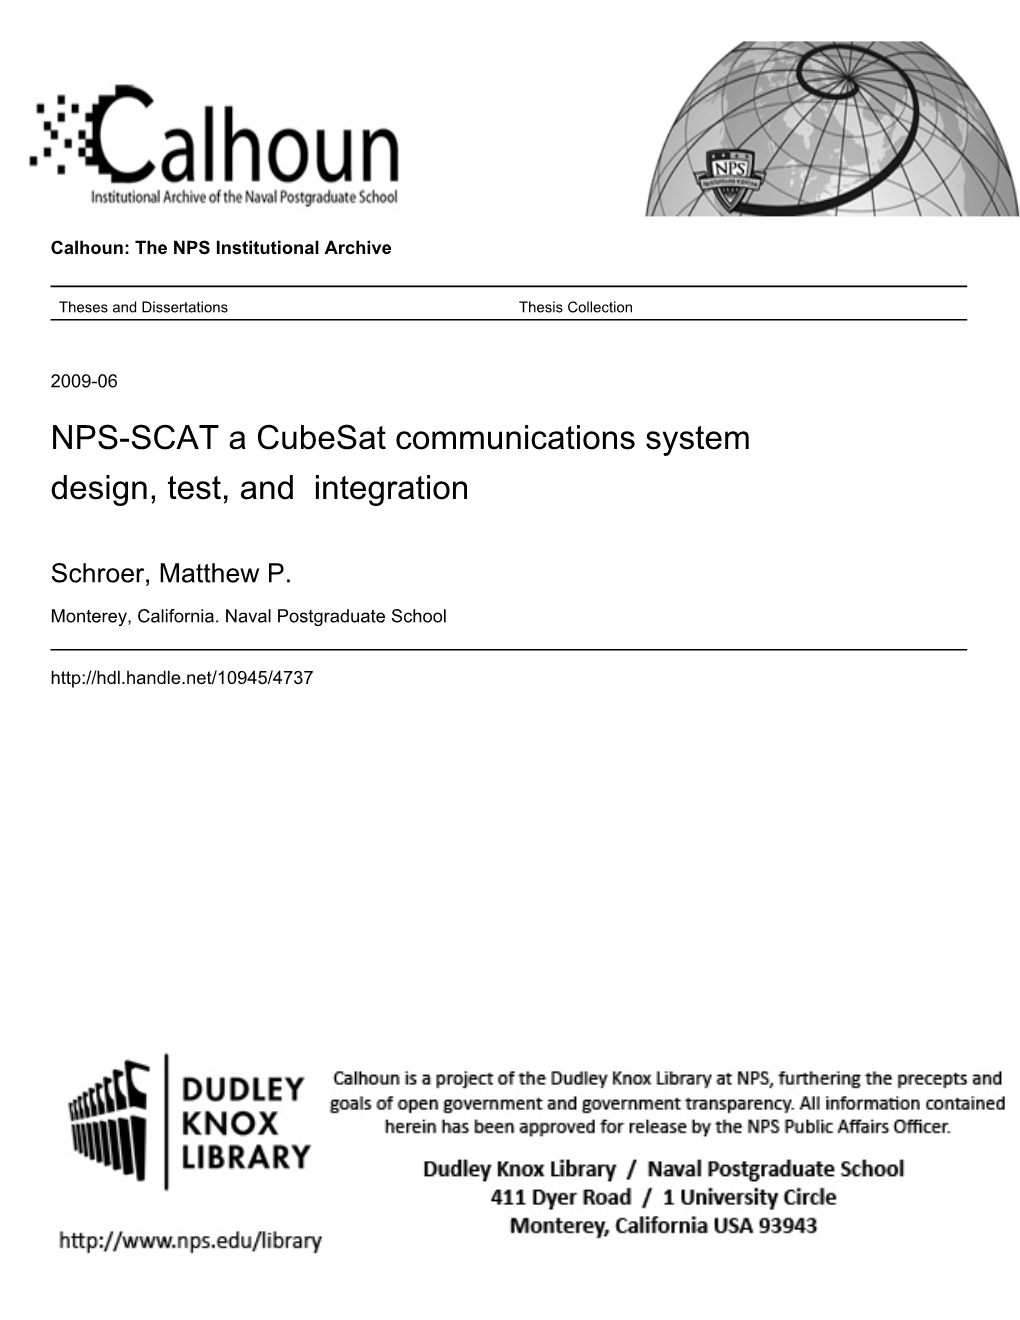 NPS-SCAT a Cubesat Communications System Design, Test, and Integration